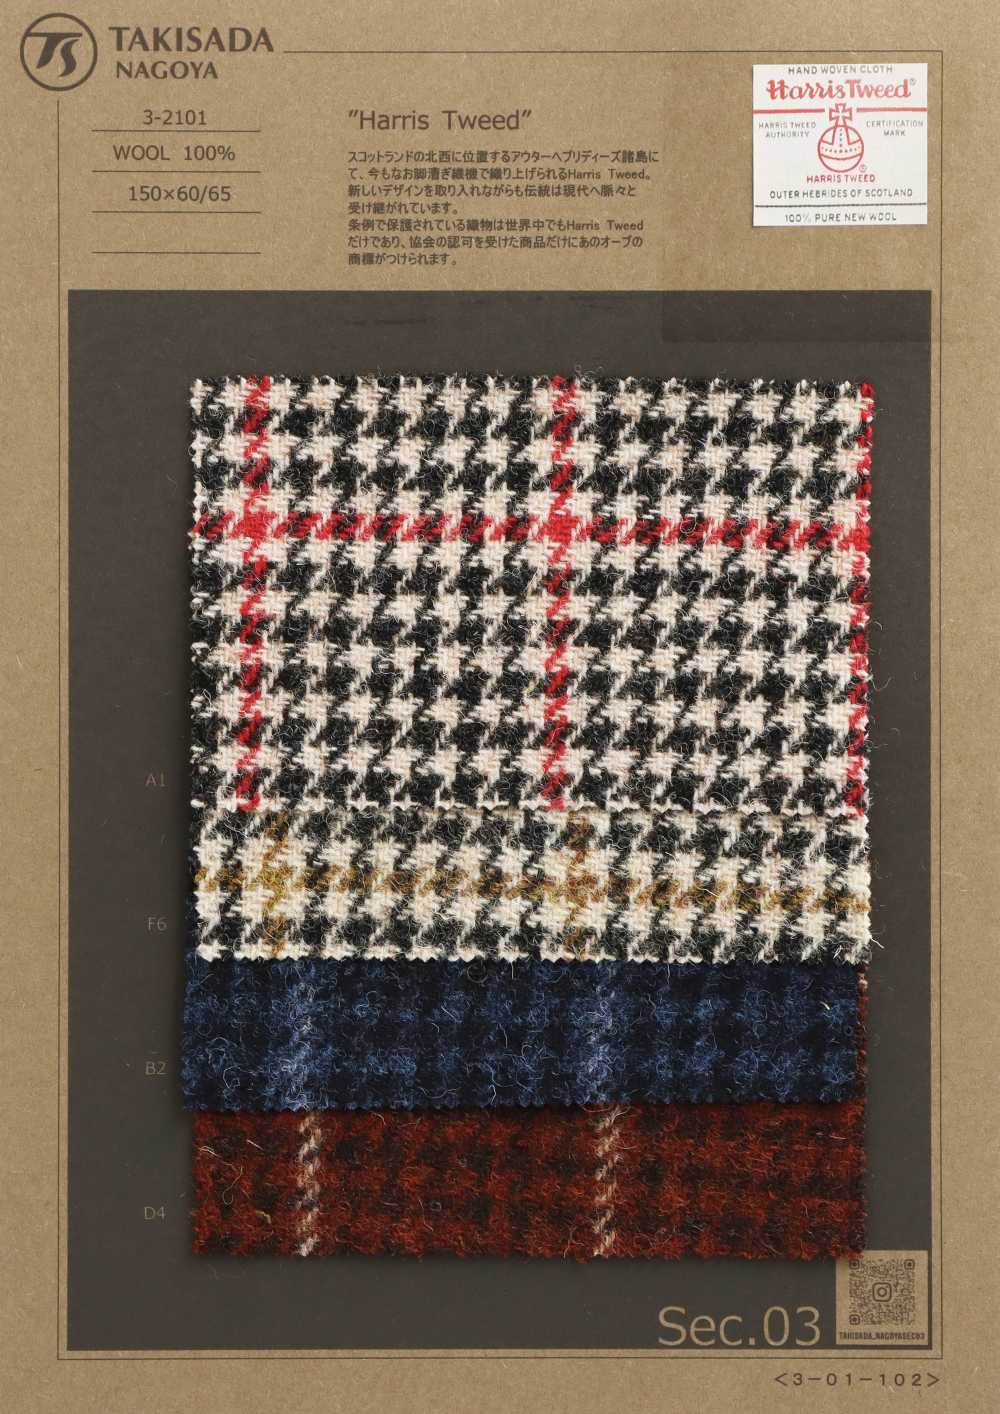 3-2101 HARRIS Harris Tweed Gun Club Cheque[Fabrica Textil] Takisada Nagoya